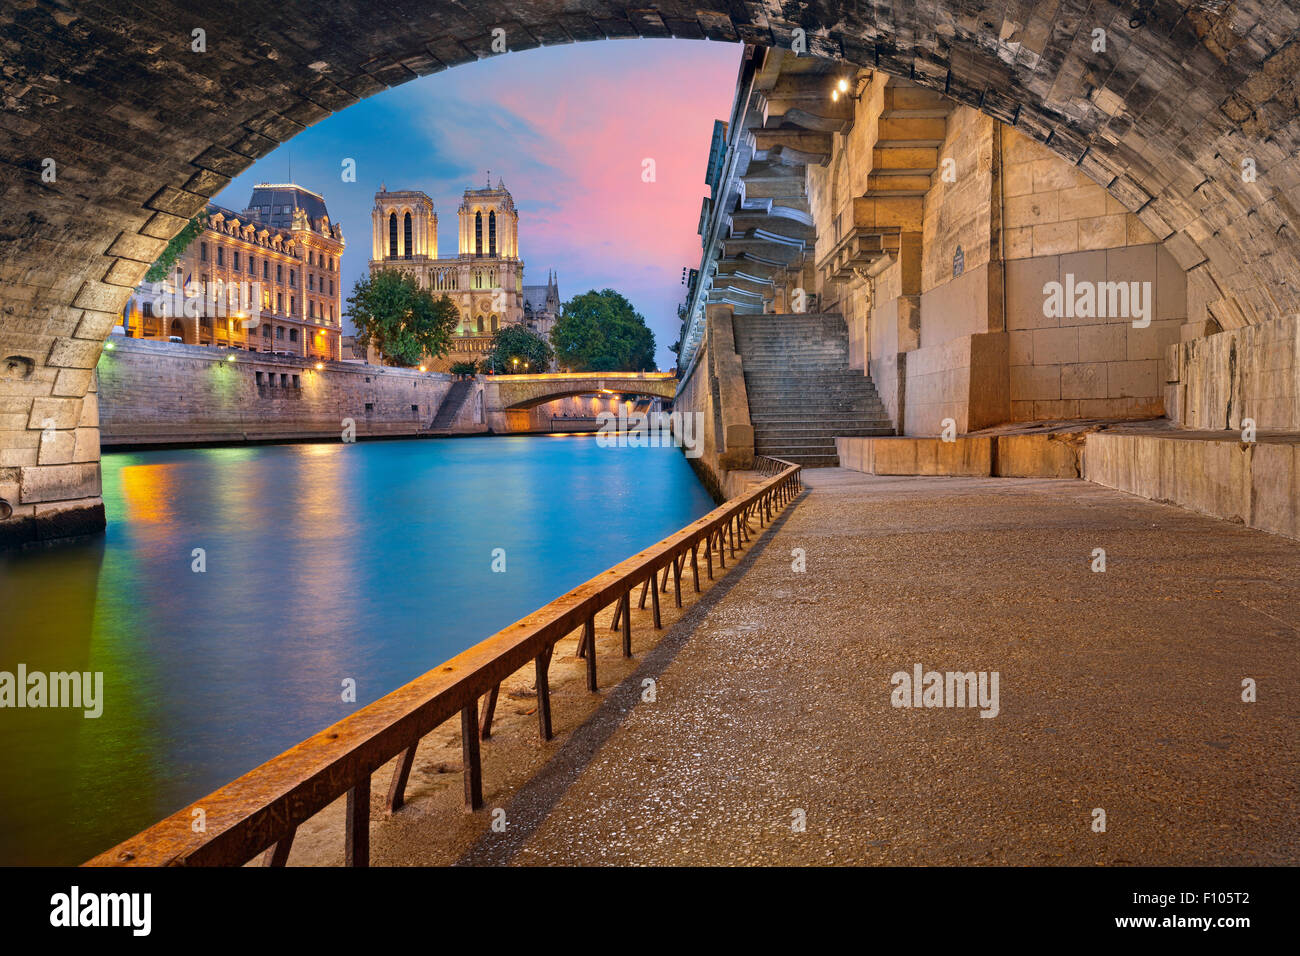 Paris.  Image of the Notre-Dame de Paris Cathedral and riverside of Seine river in Paris, France. Stock Photo